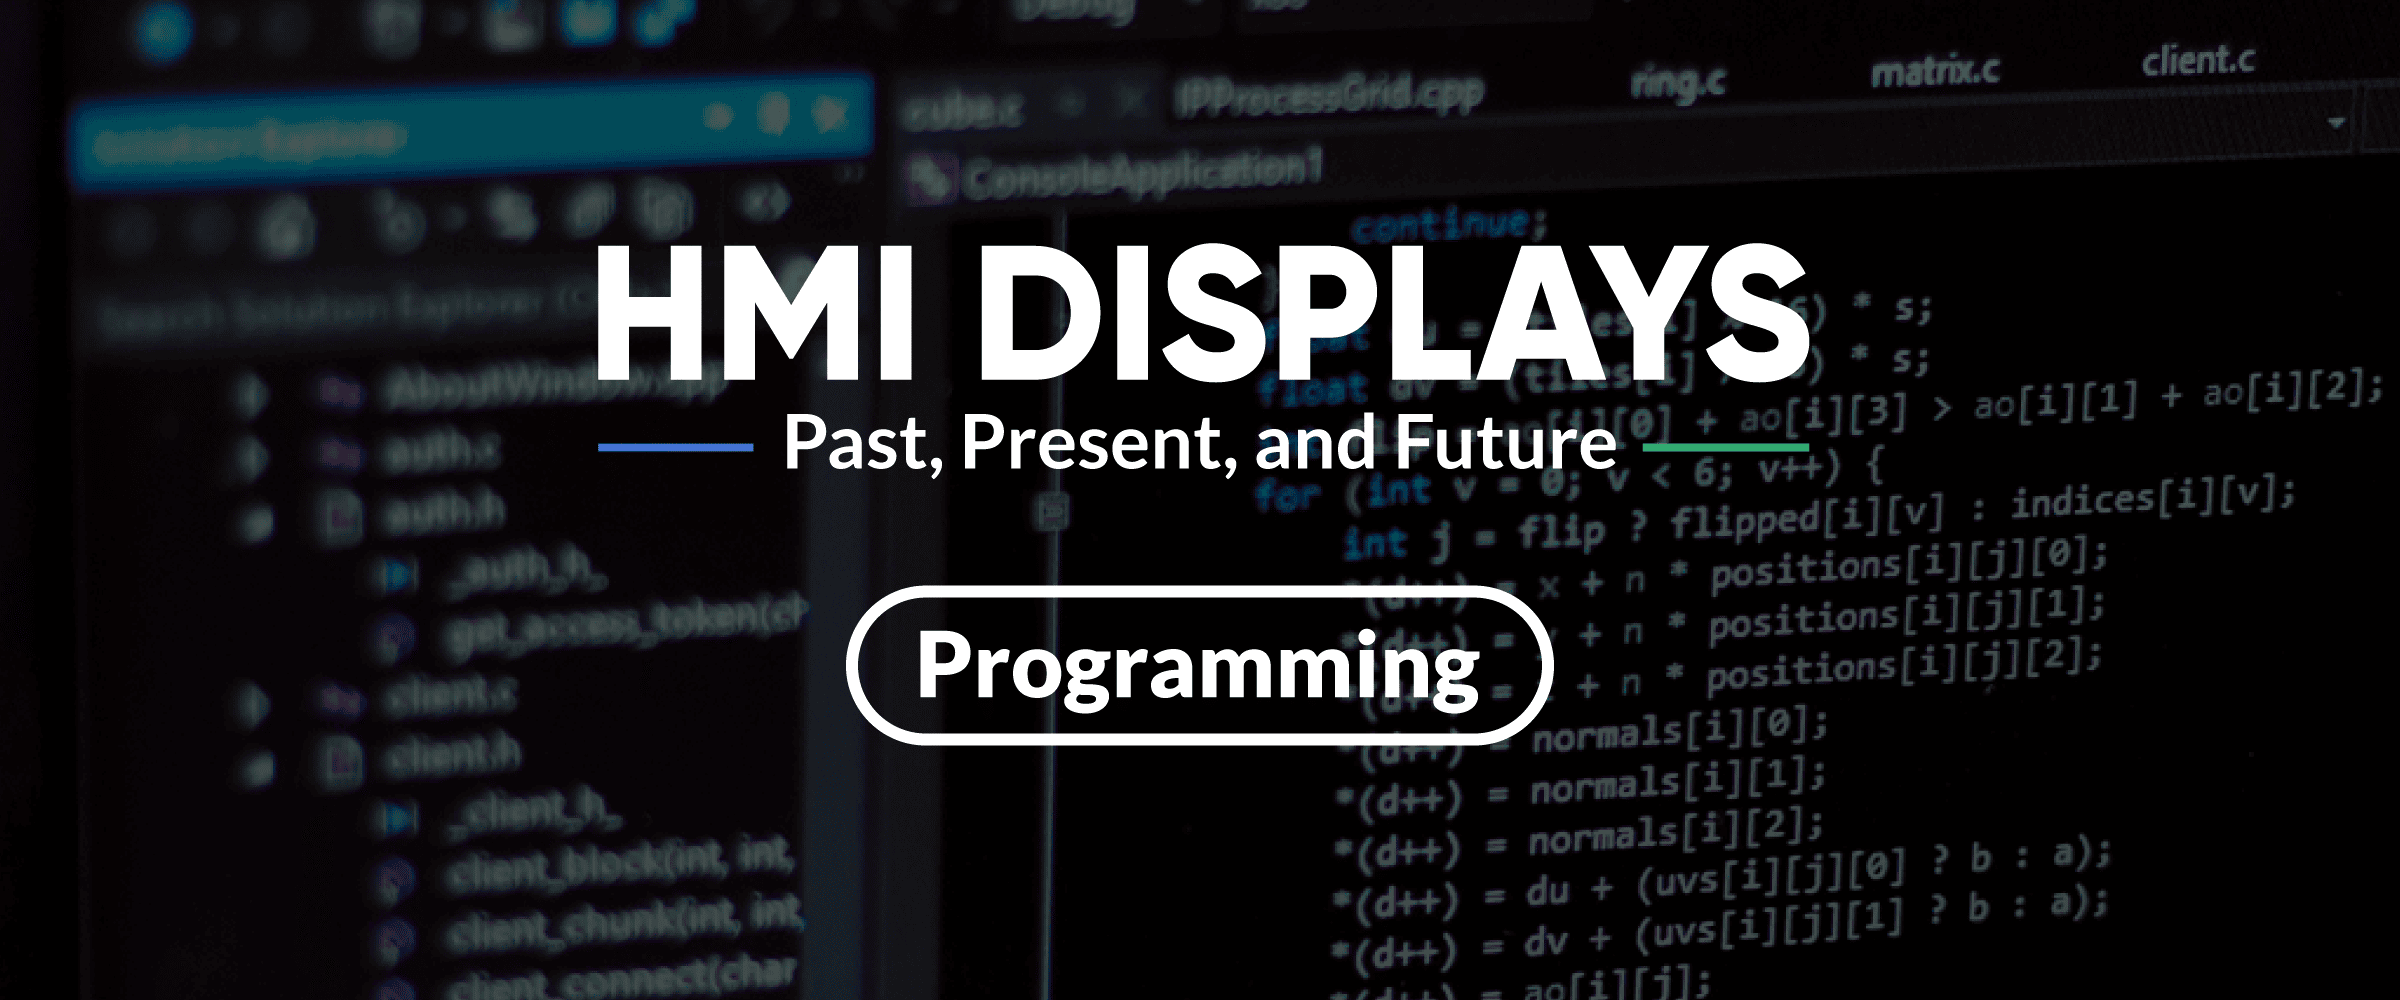 HMI Display programming method history